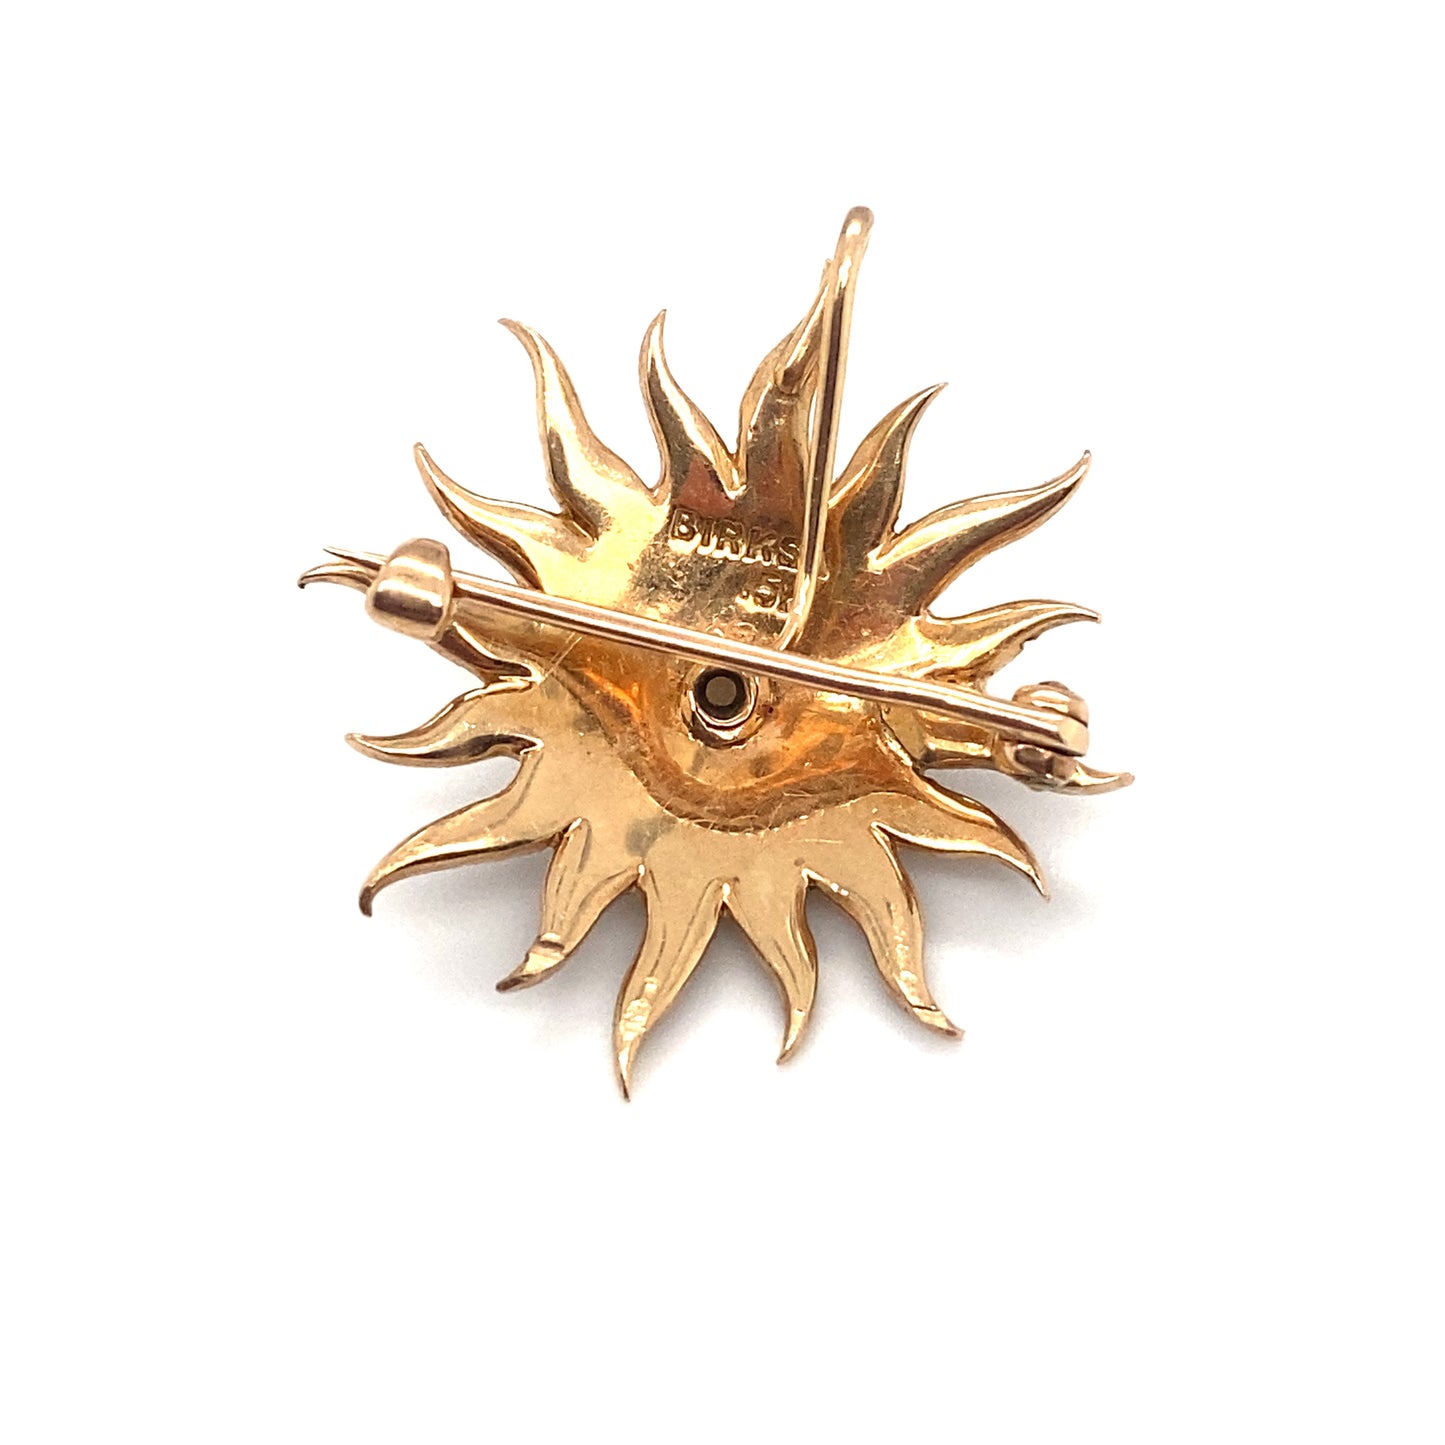 Circa 1890s Birks London Canada Sunburst Seed Pearl Brooch in 15K Gold